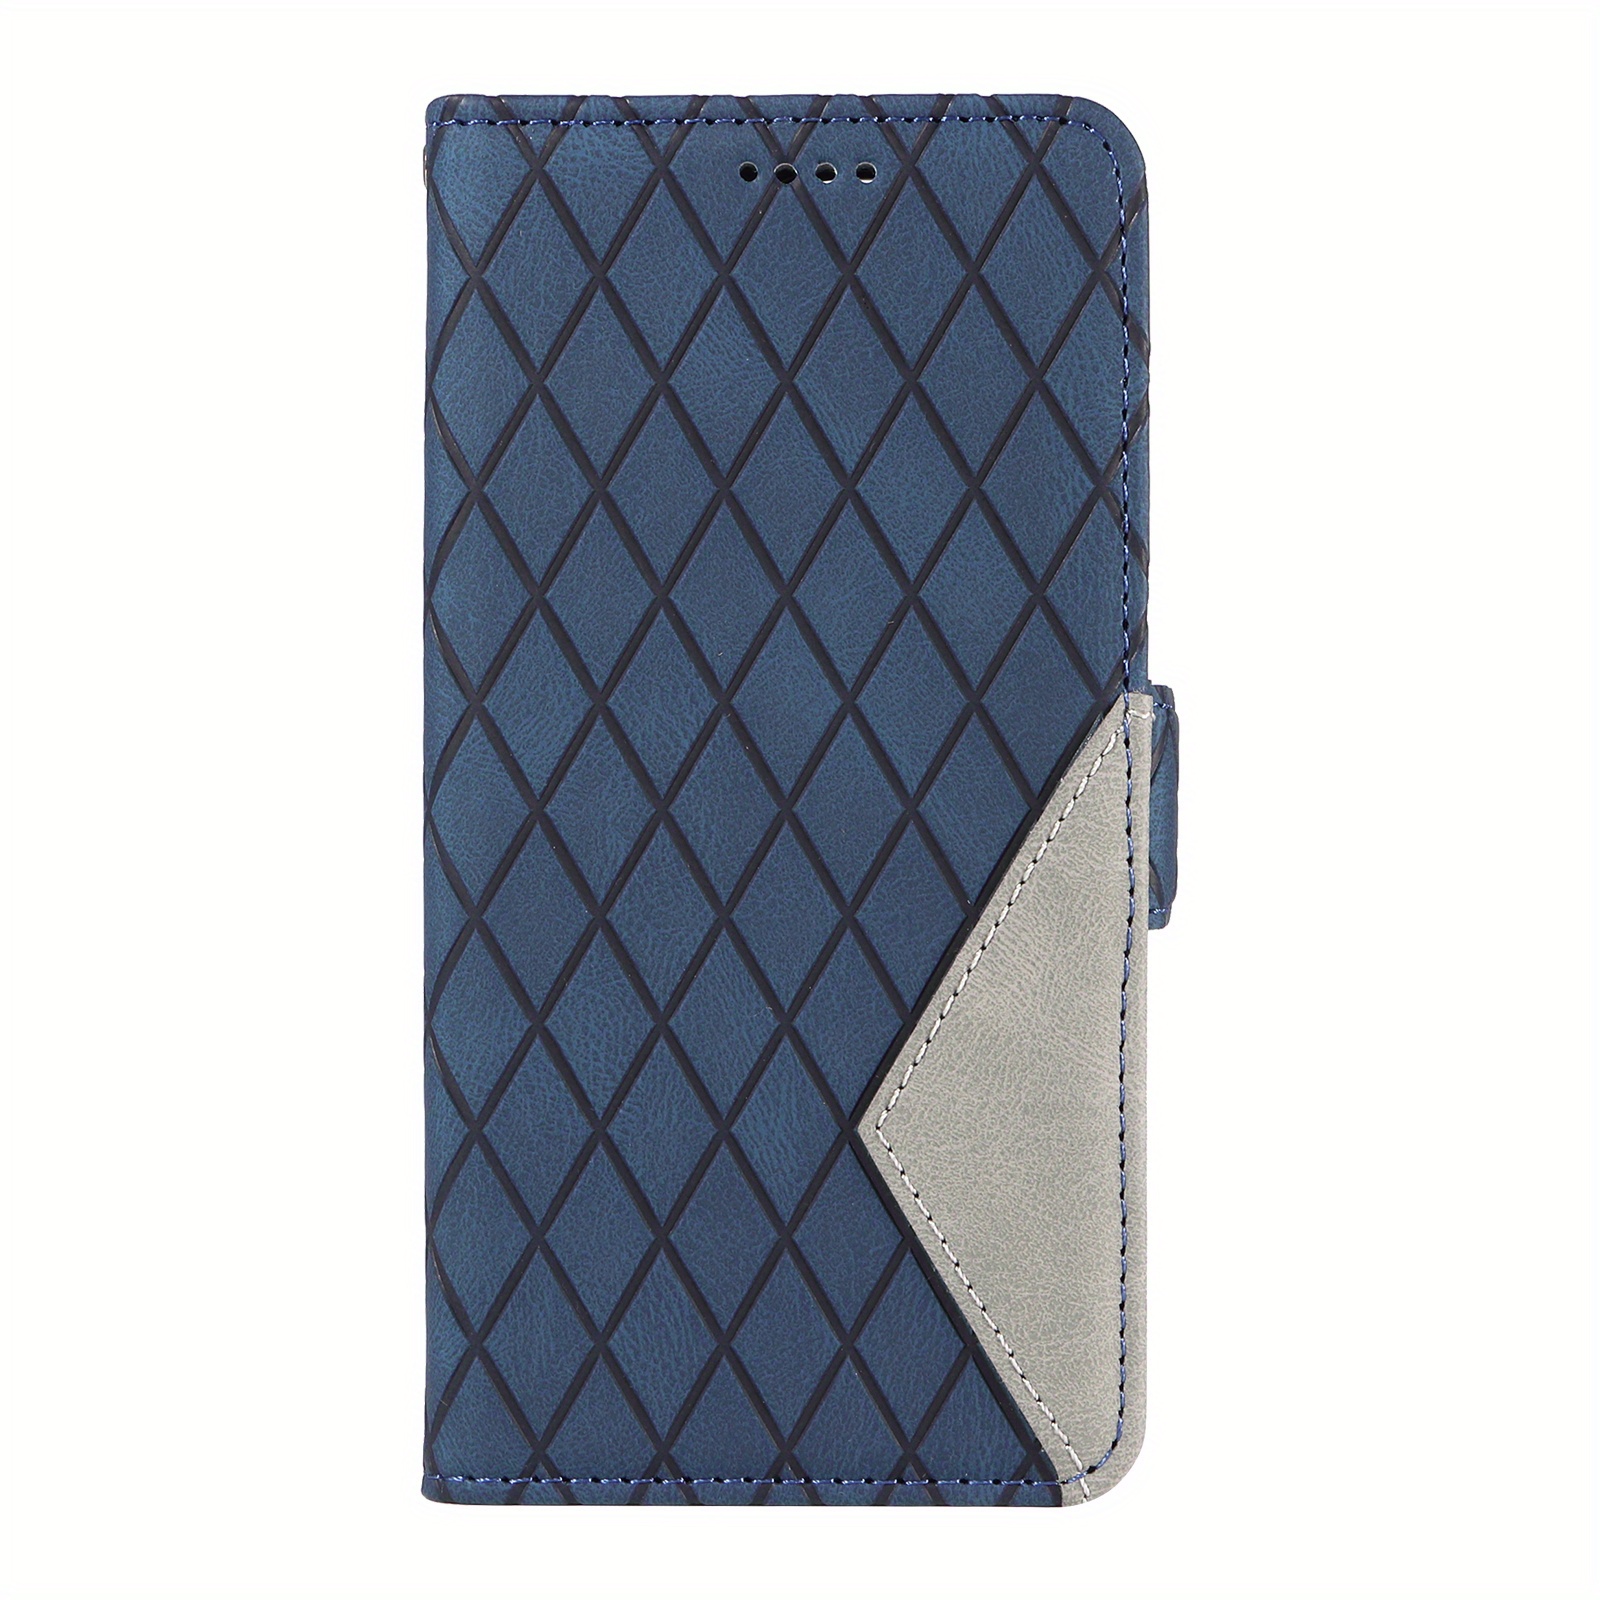 LOUIS VUITTON PATERN ICON LOGO BLUE Samsung Galaxy S21 Ultra Case Cover